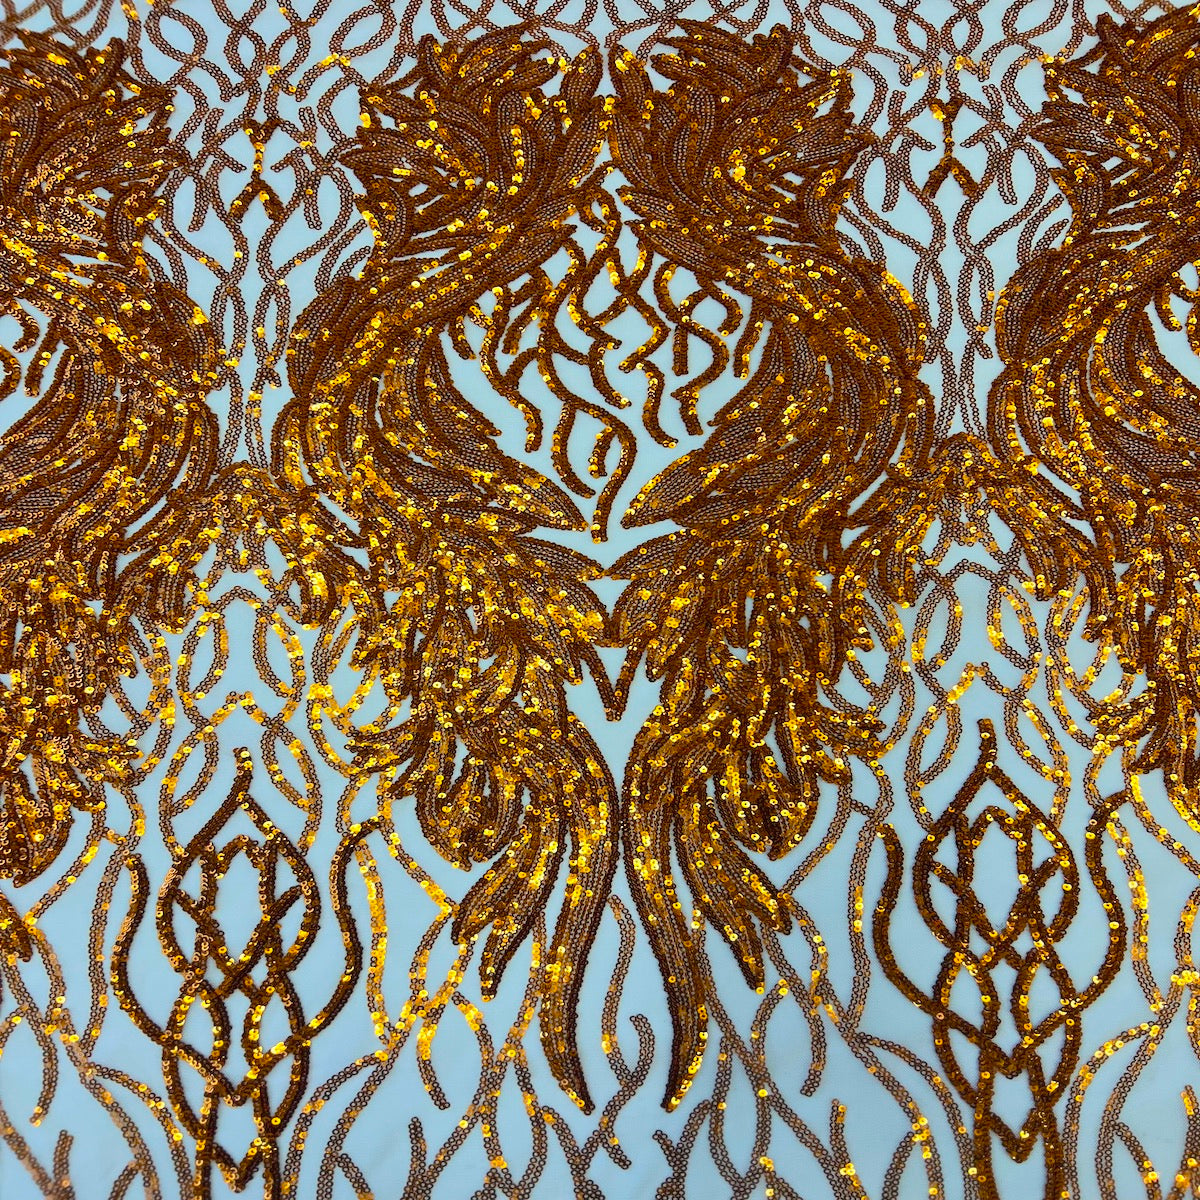 Rust Orange Lioness Stretch Sequins Lace Fabric